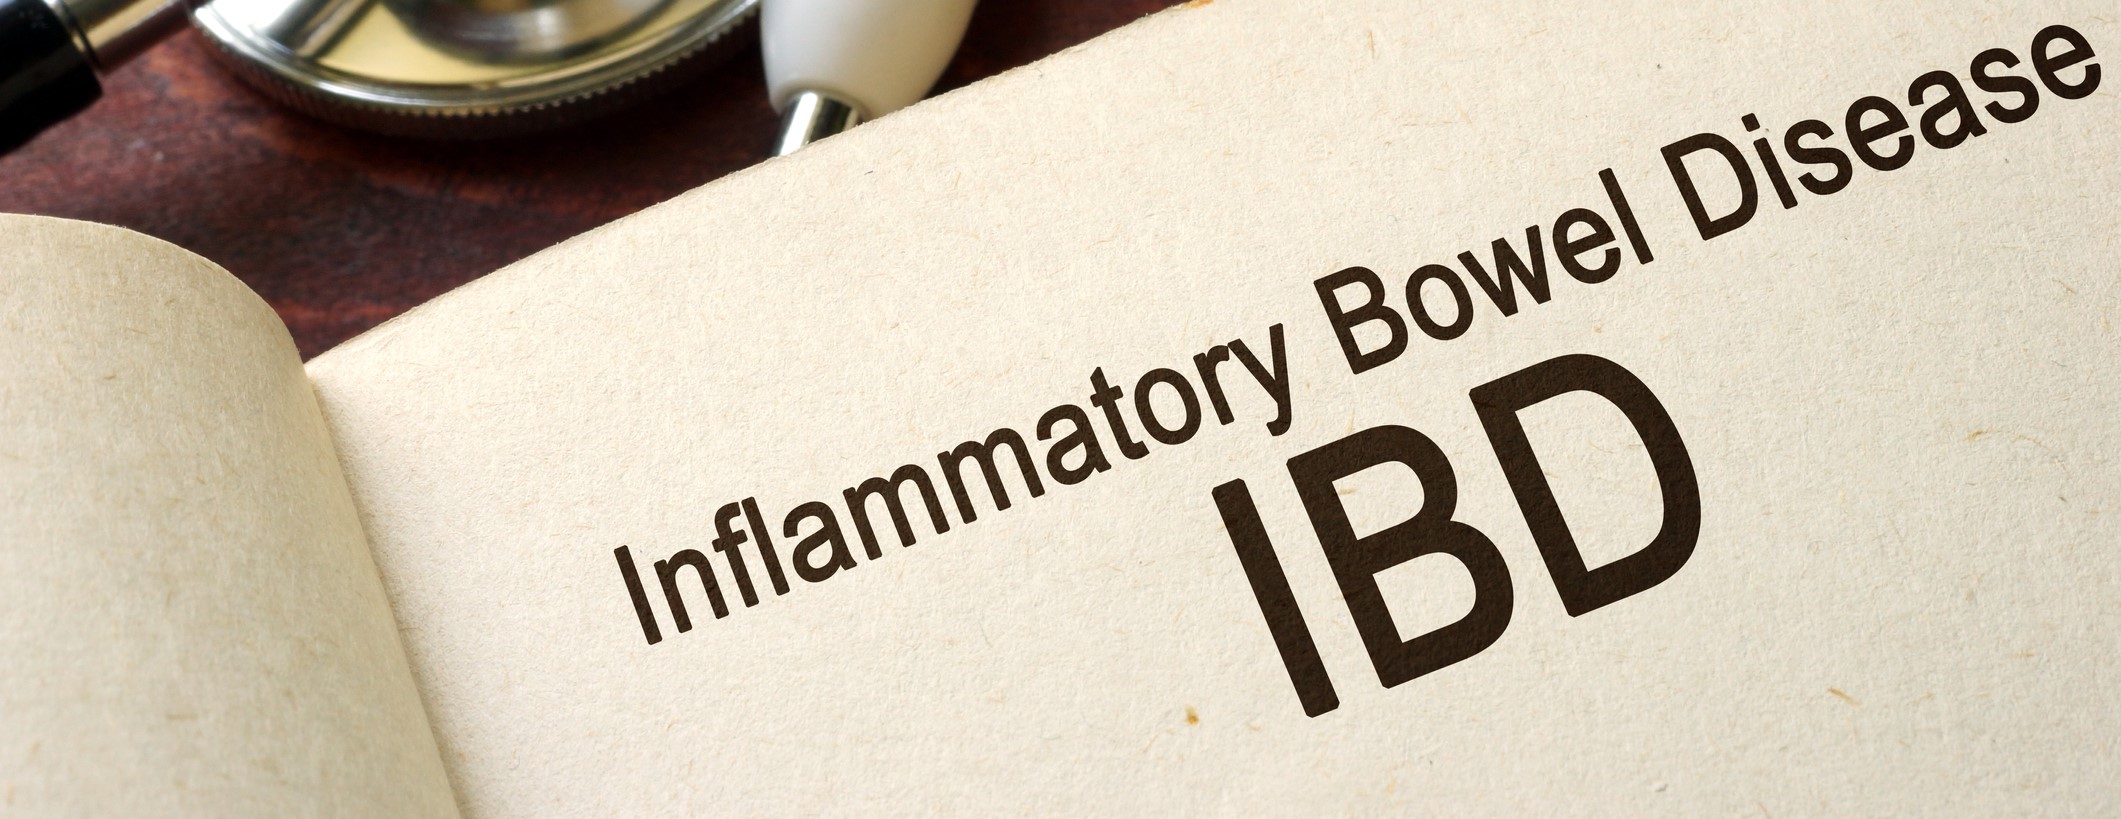 Inflammatory Bowel Disease (IBD)